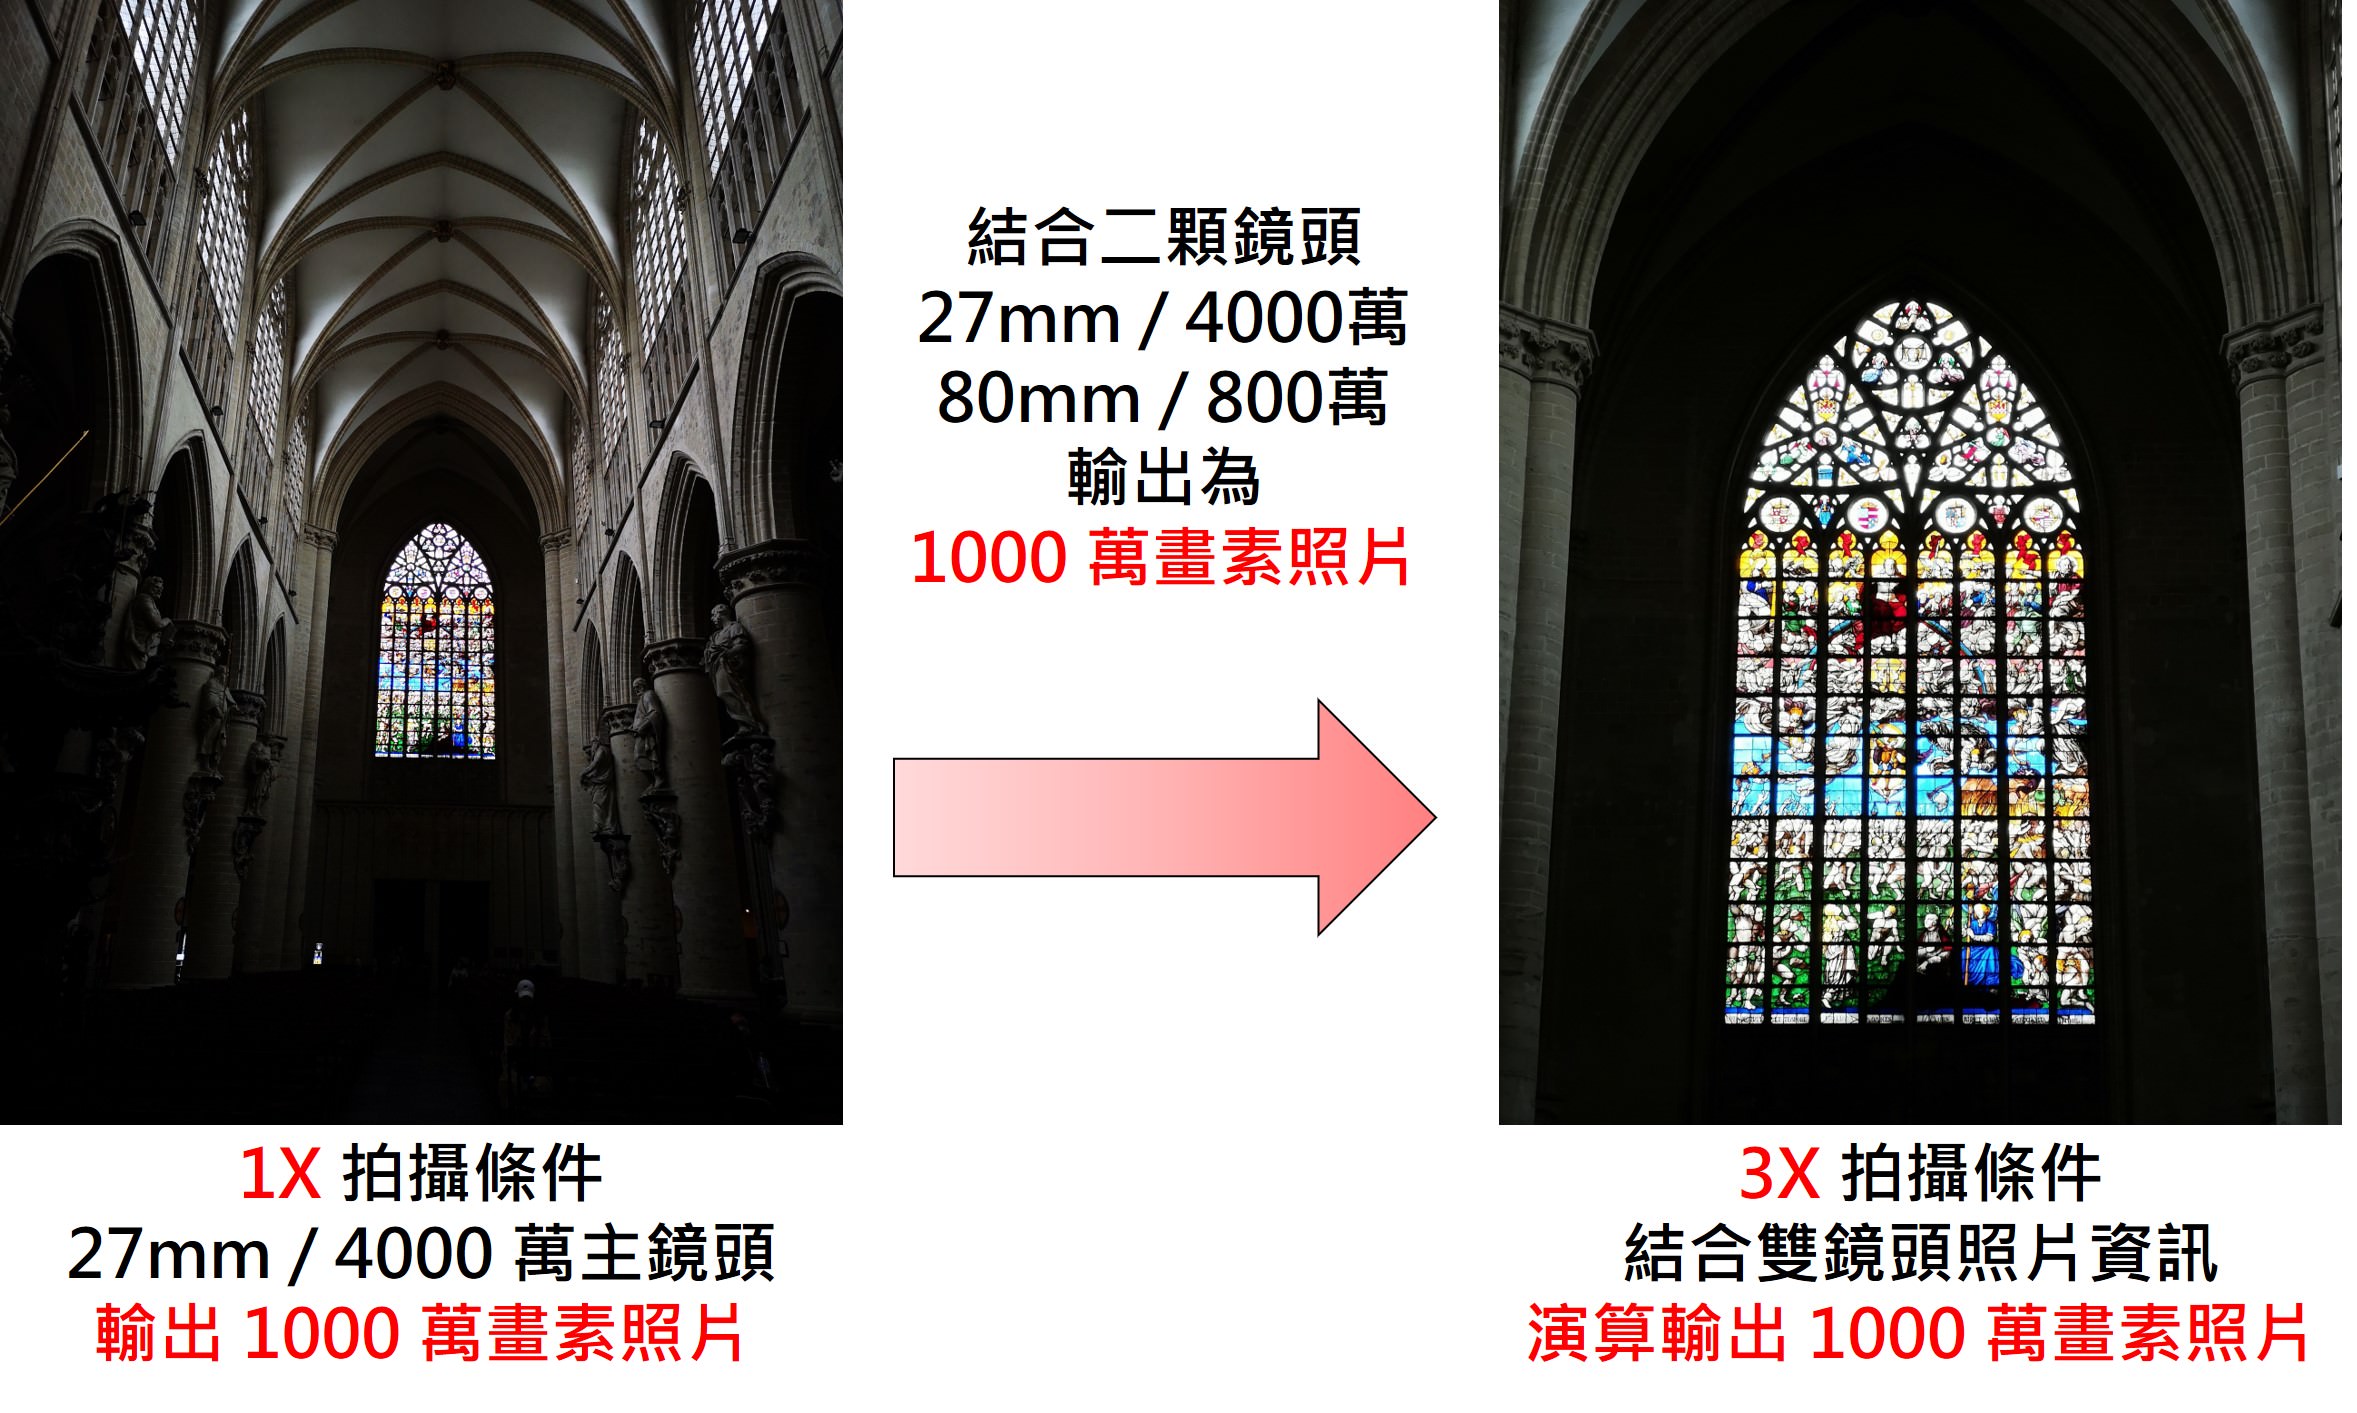 [3C 開箱] 華為 P20 Pro 提昇攝影新「鏡」界，3 鏡頭 4000 萬像素更上層樓